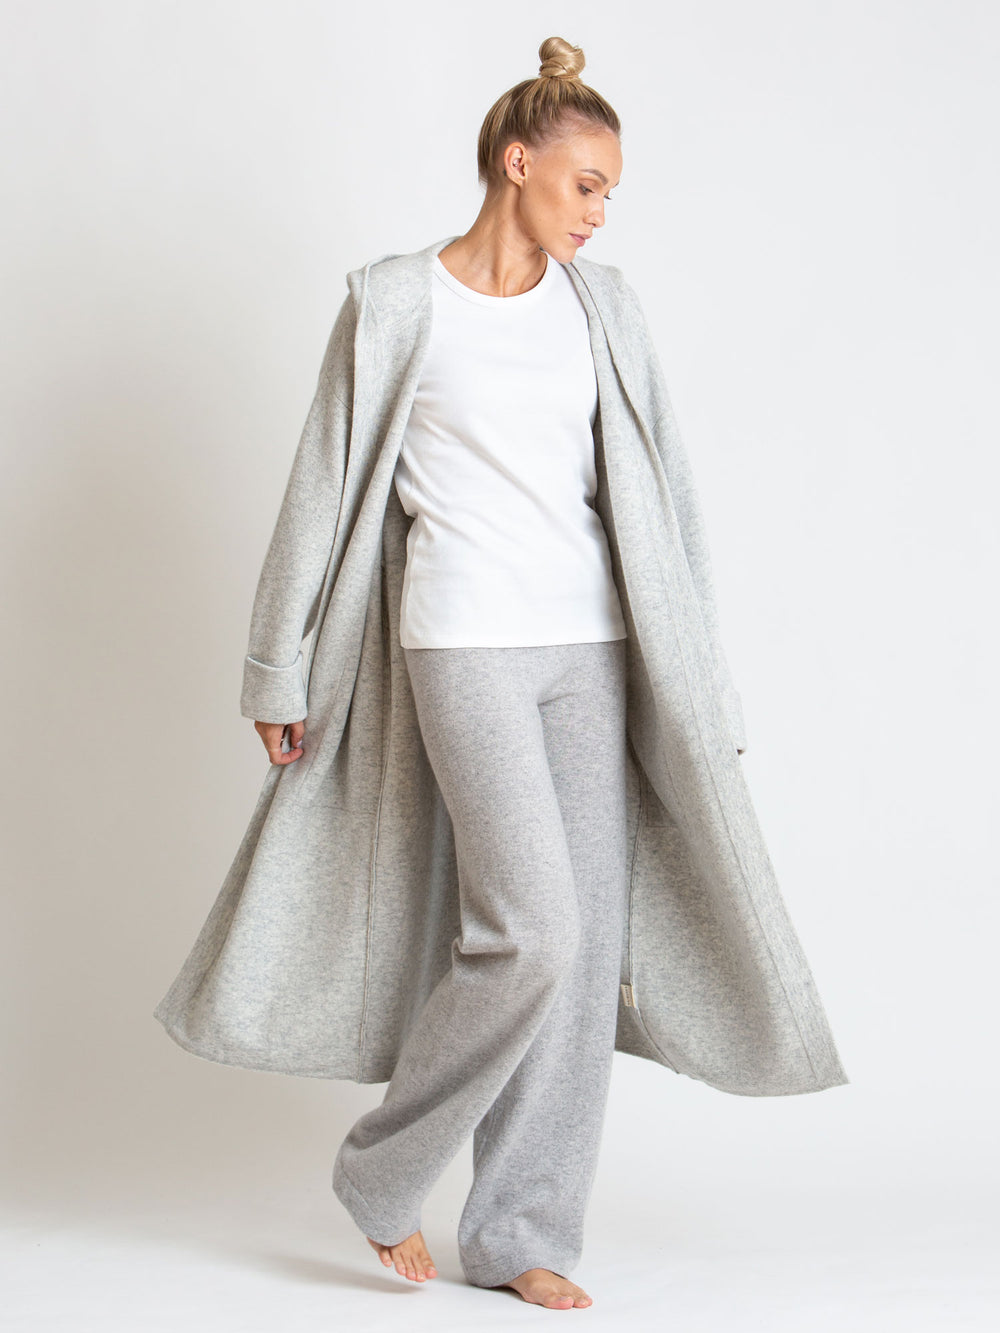 Kashmina "Classic" pants in 100% pure cashmere. Color: light grey. Scandinavian design by Kashmina. 